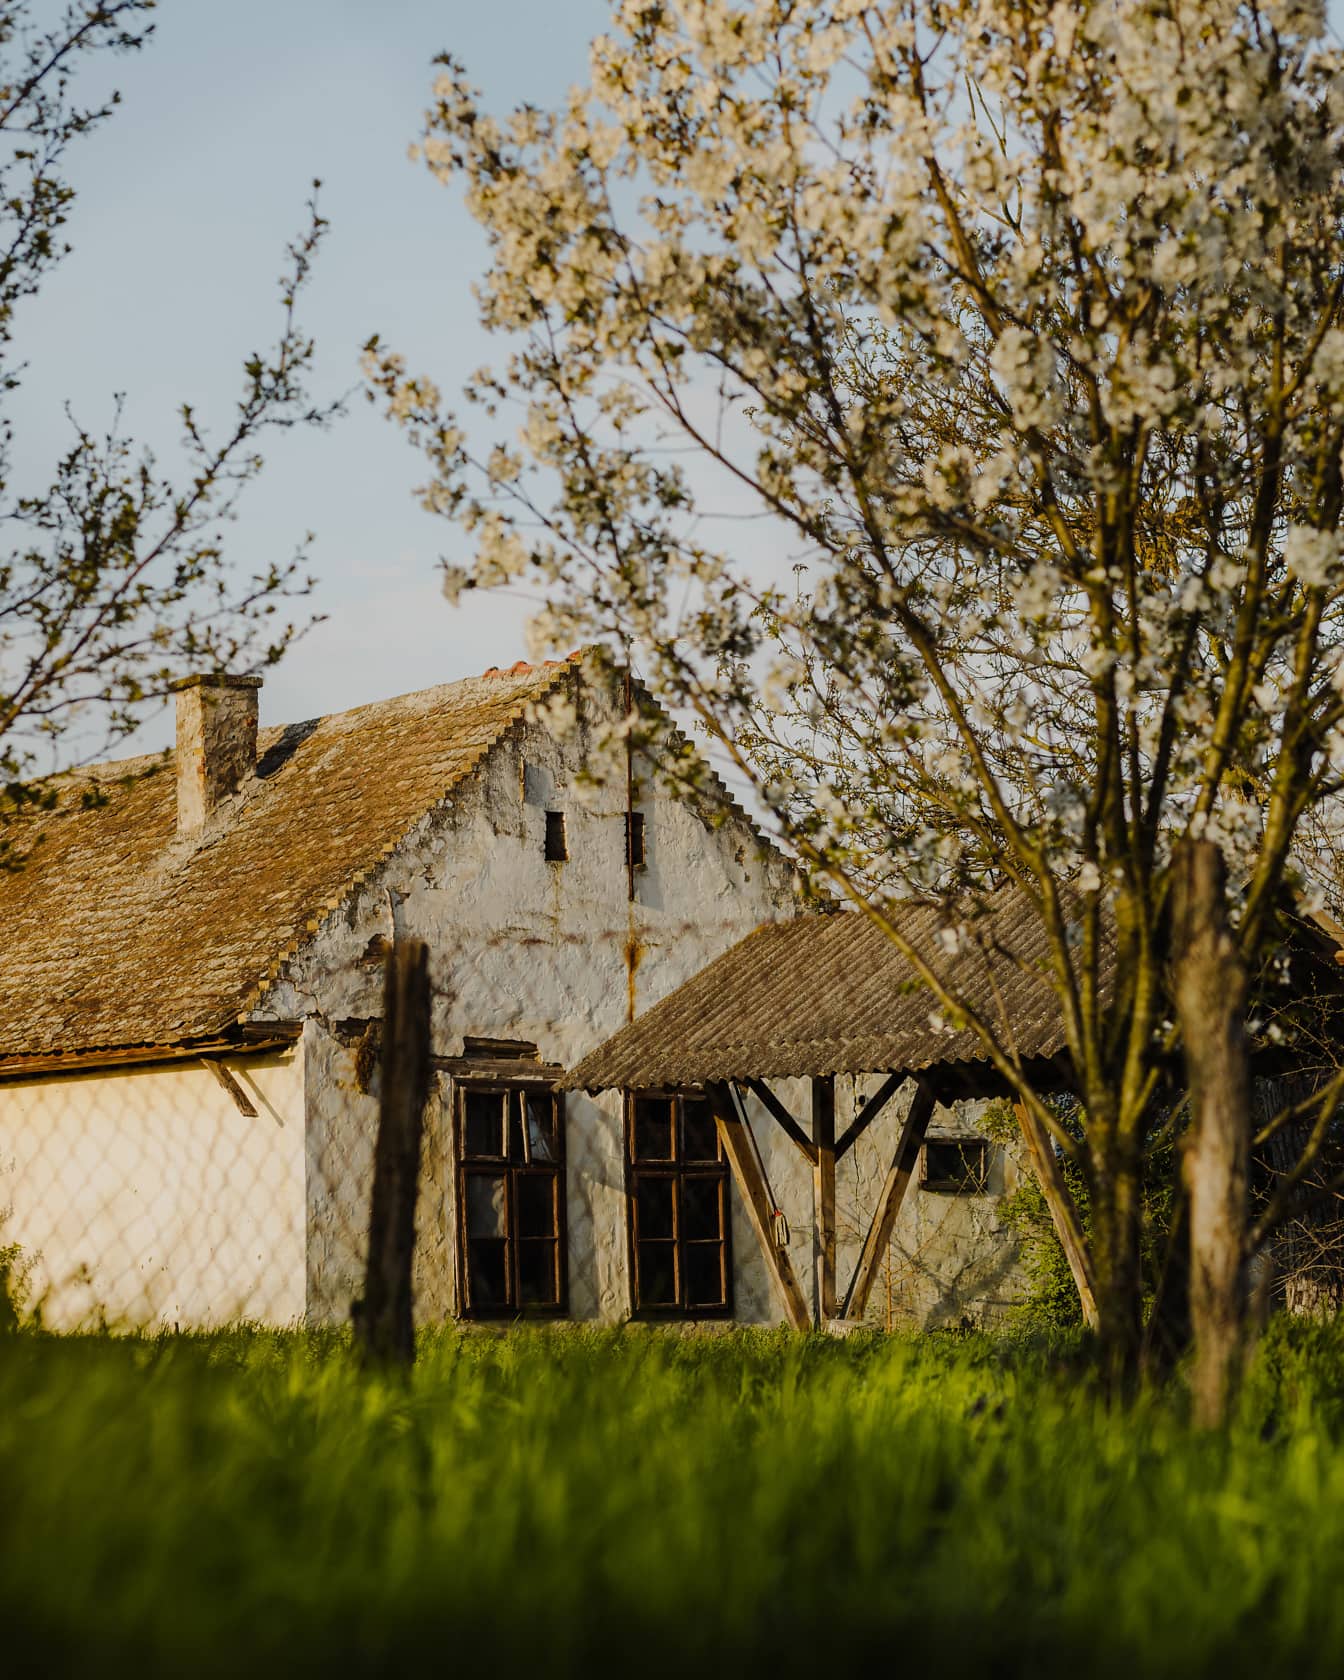 Rumah pertanian desa pedesaan di pedesaan dengan halaman belakang berumput